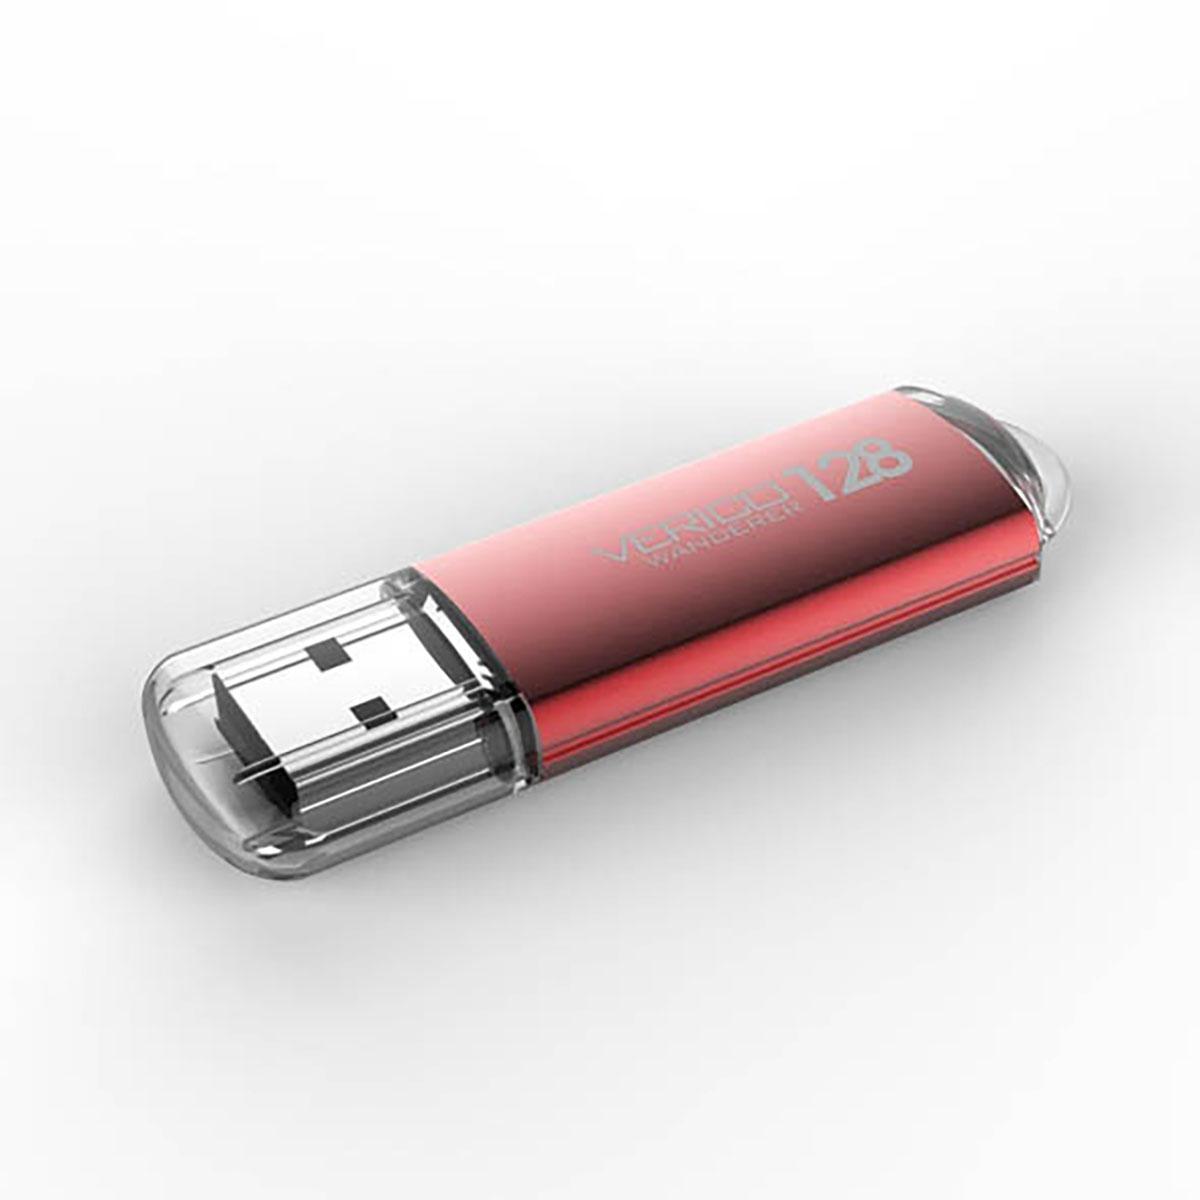 MEMORIA USB VERICO (1UDOV-M4RD83-NN) 8GB WANDERERVM04L, METALICO ROJO, USB2.0 - 1UDOV-M4RD83-NN